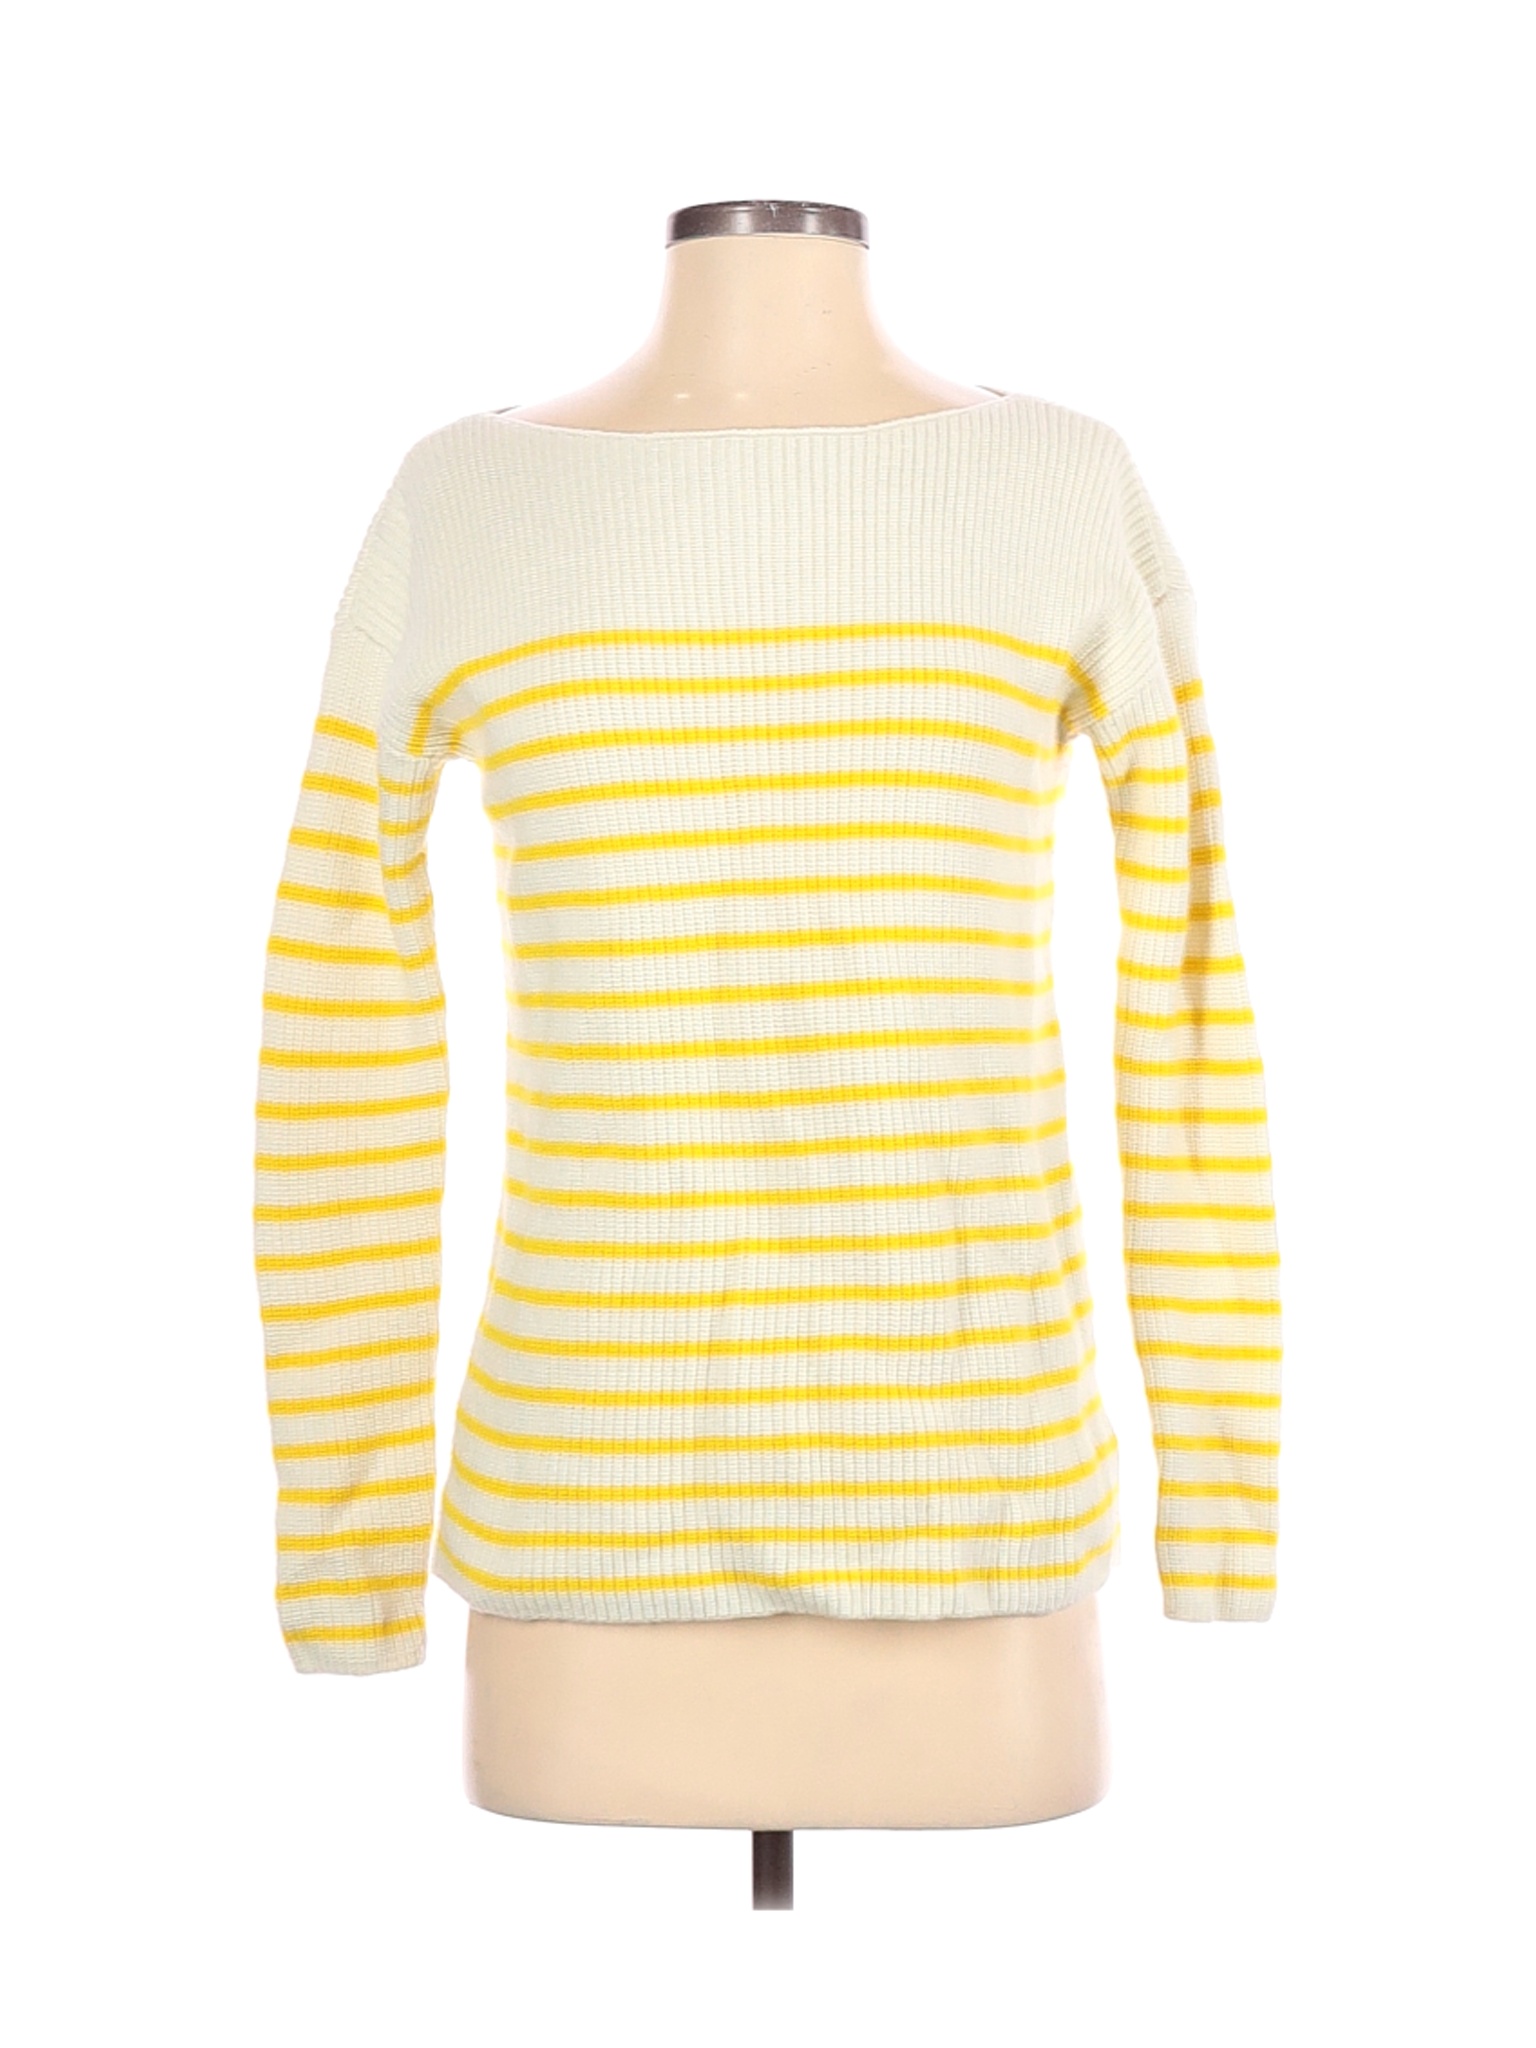 Gap Women Yellow Pullover Sweater S | eBay